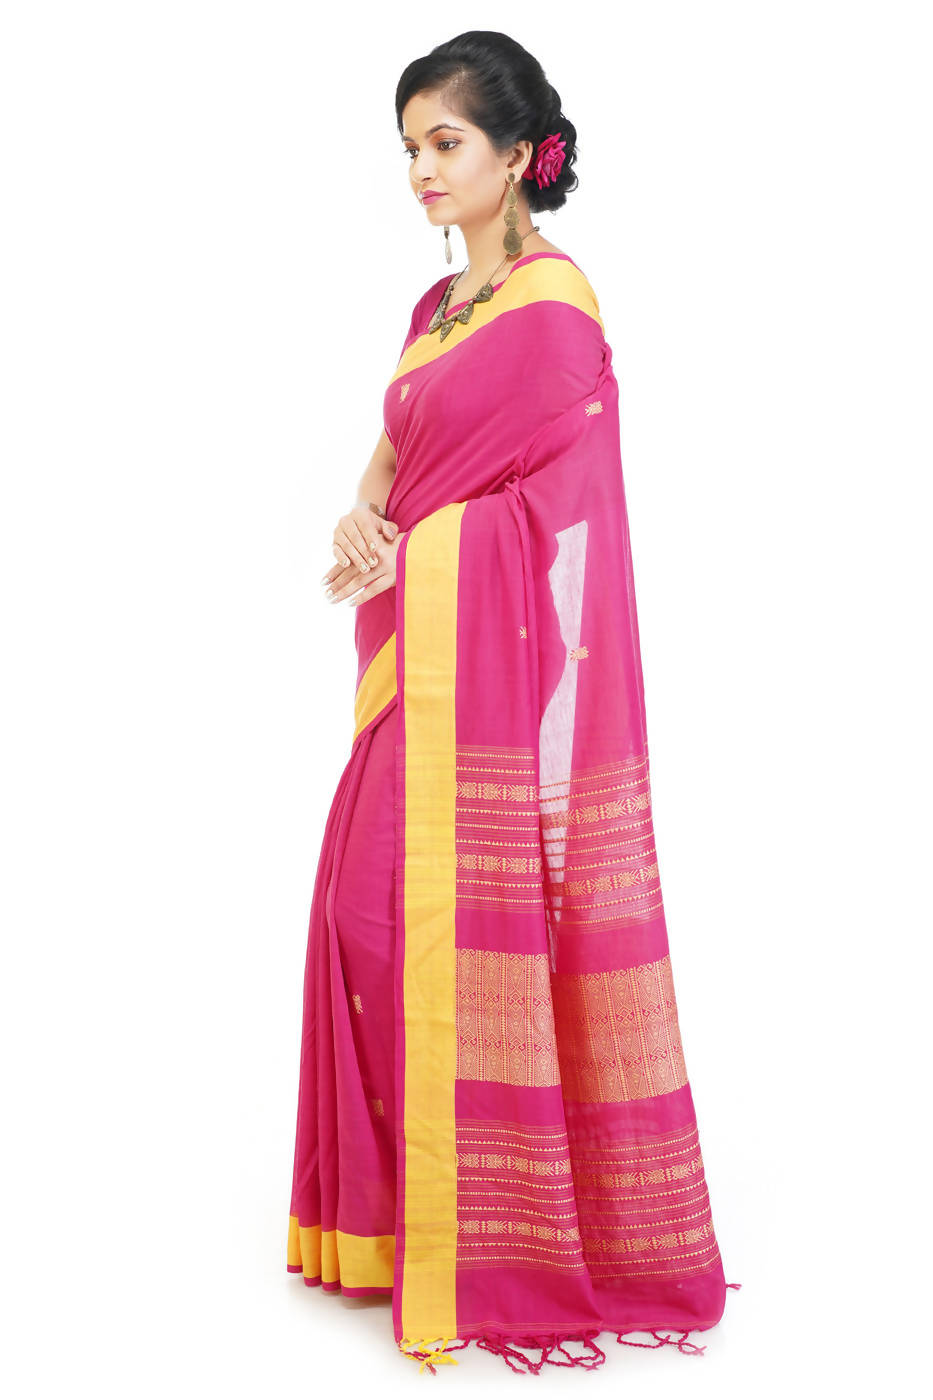 Handloom bengal pink and yellow cotton saree